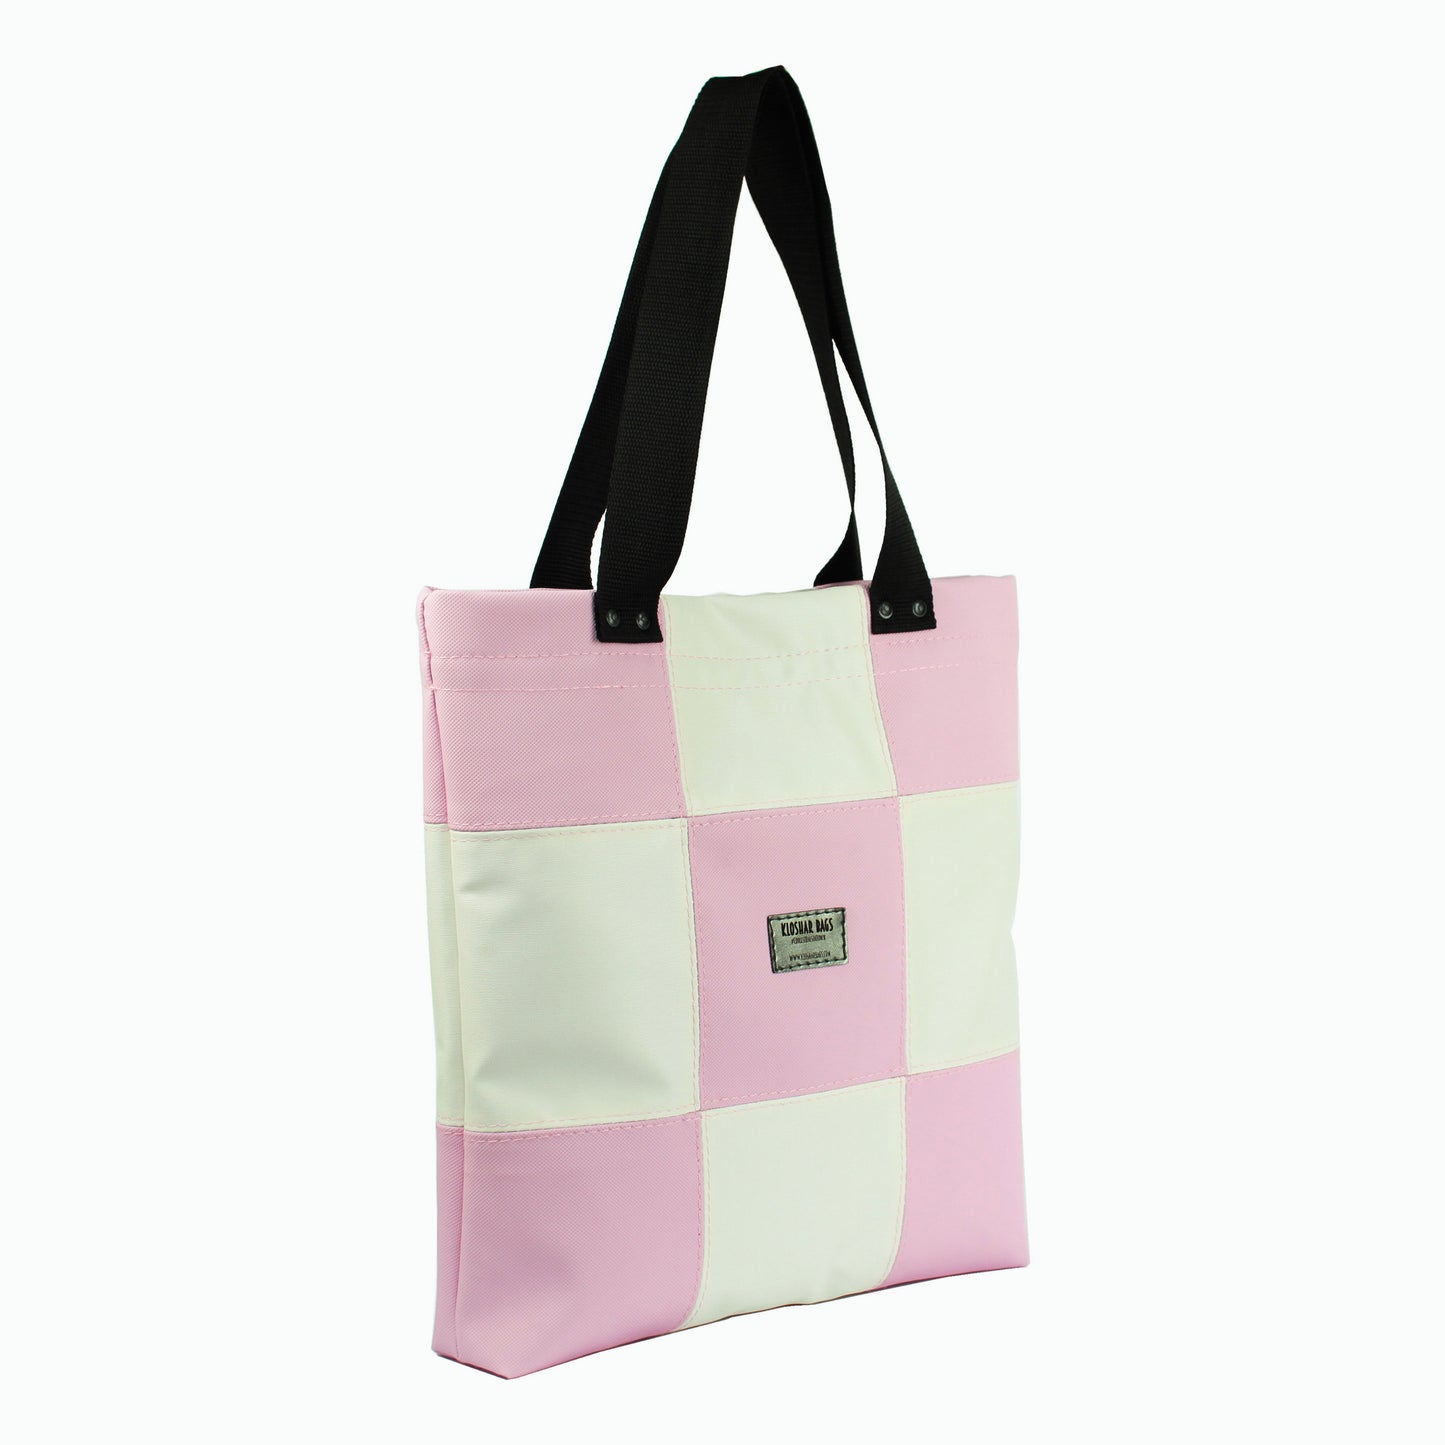 "CHESS PW" tote bag